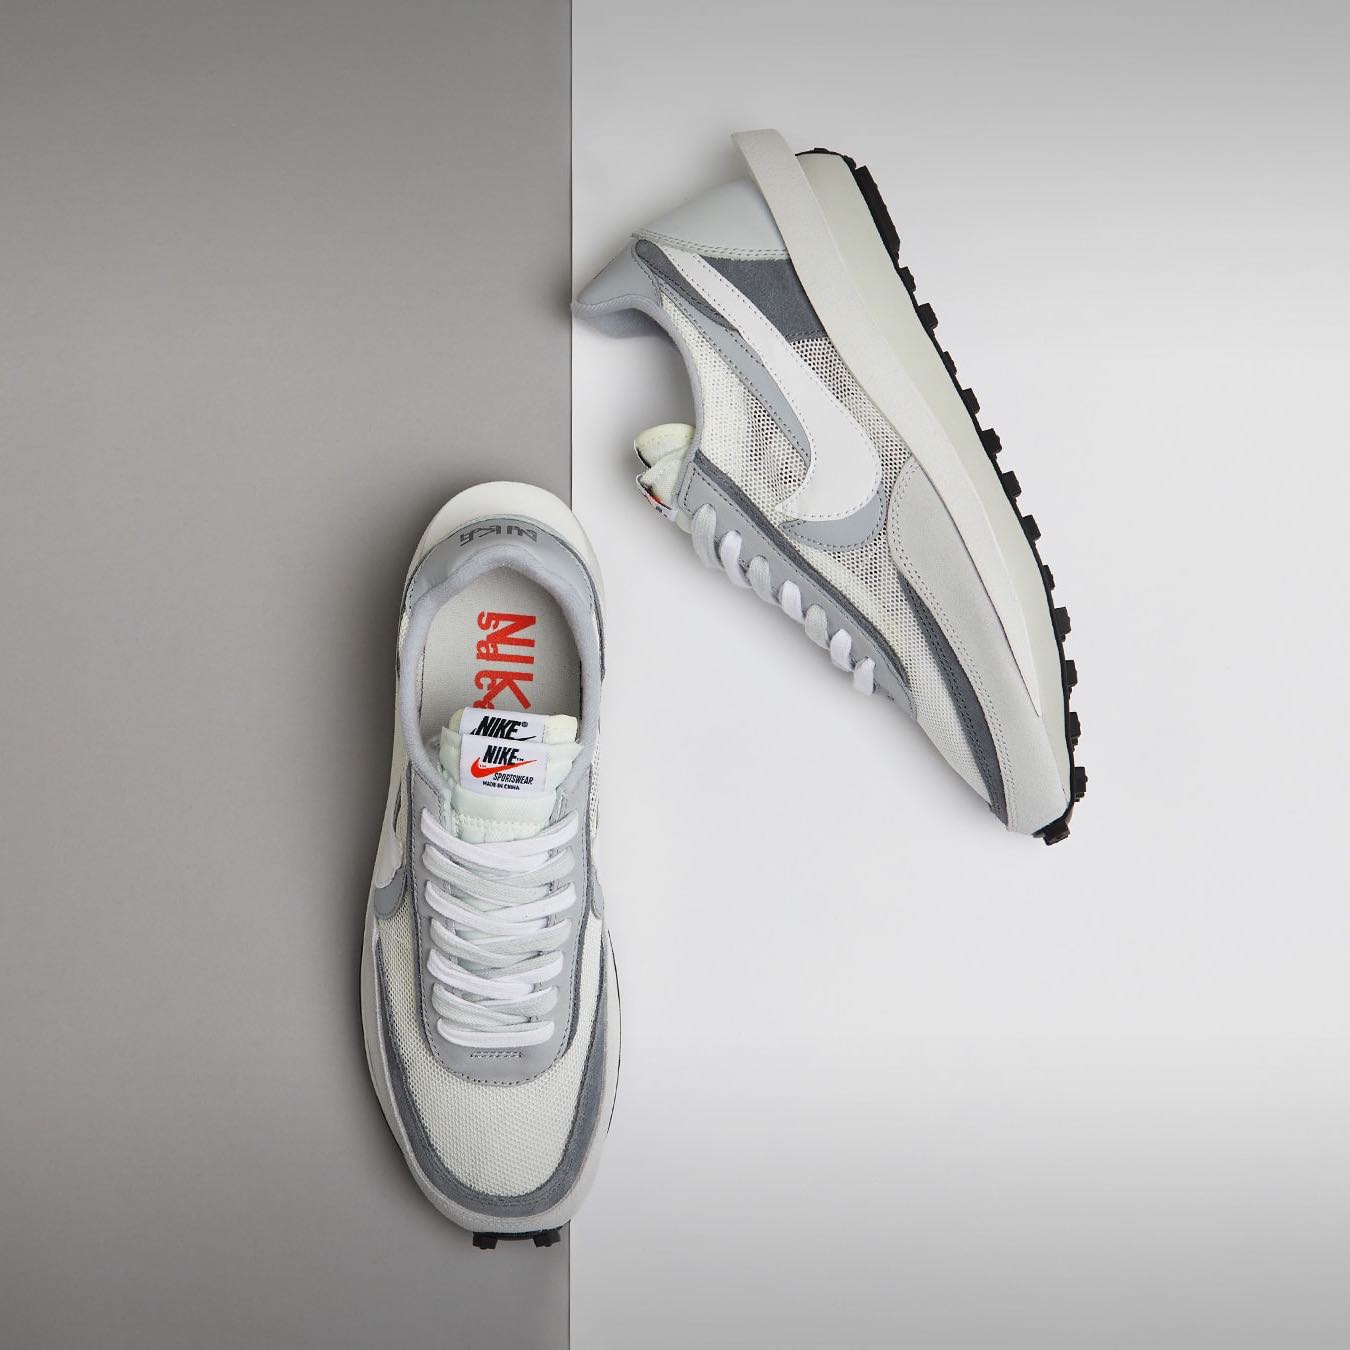 Nike x Sacai LDWaffle
White / Grey